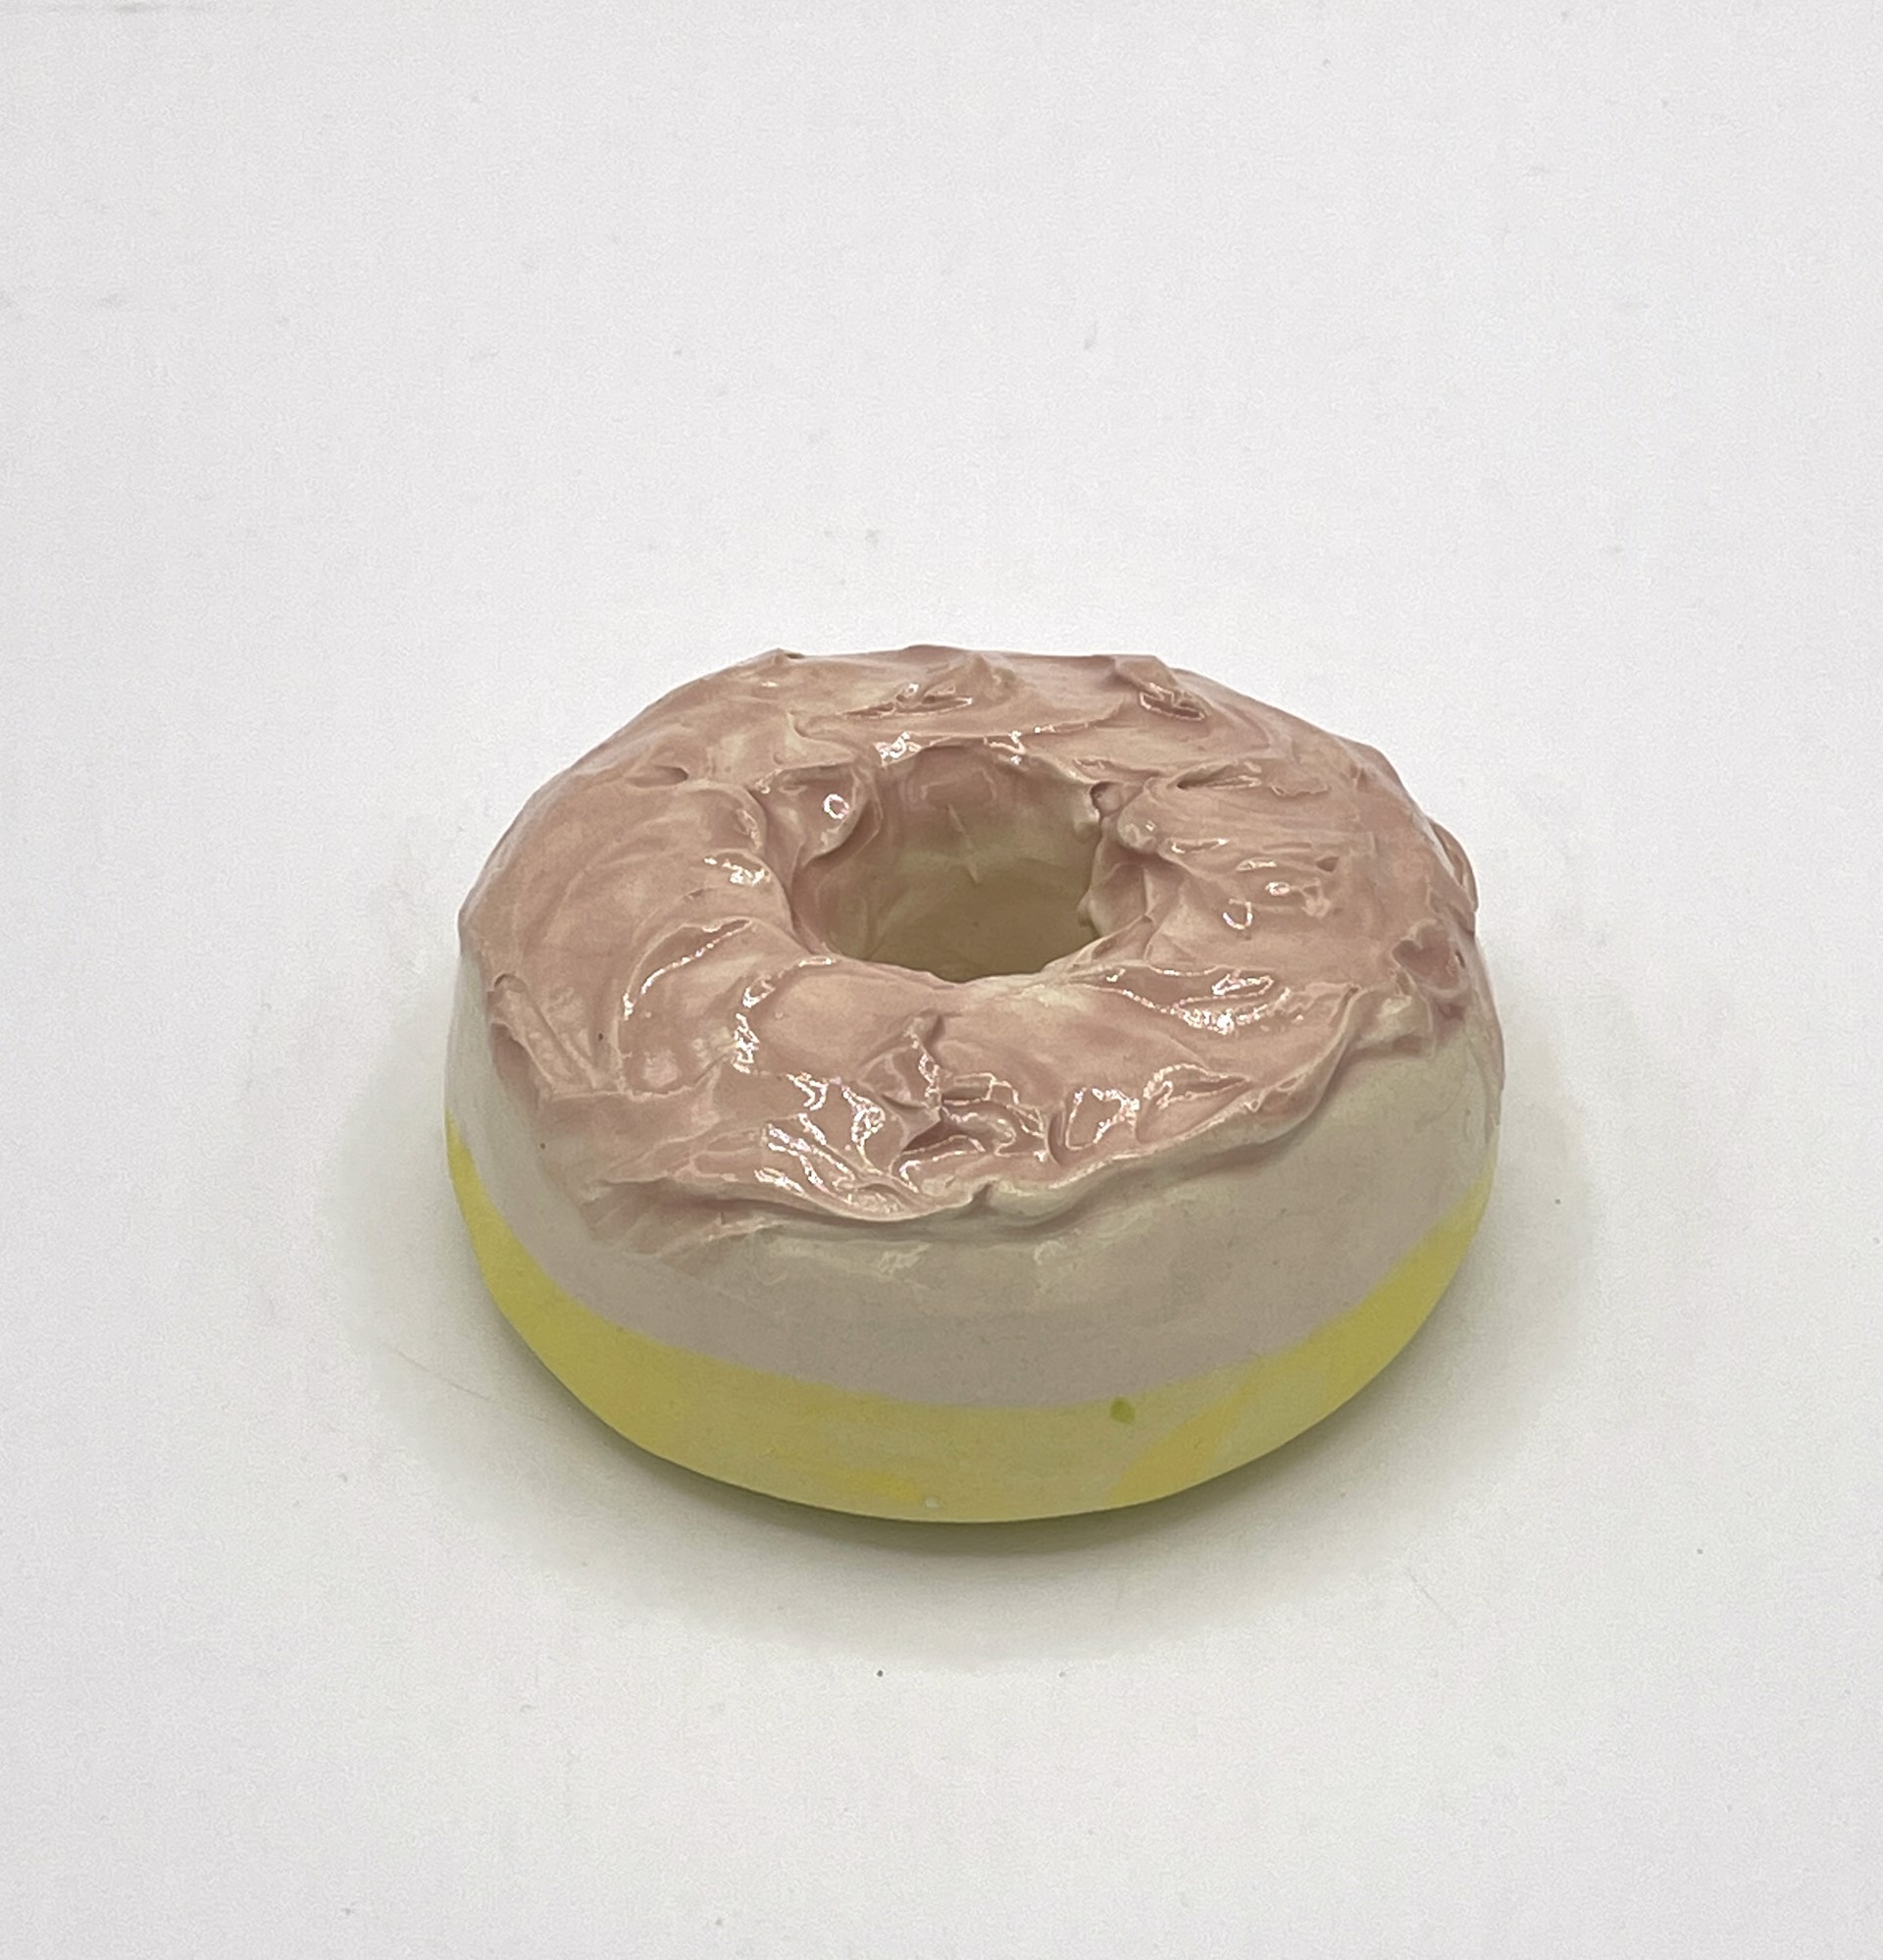 Lemon Donut with Strawberry Glaze by Liv Antonecchia